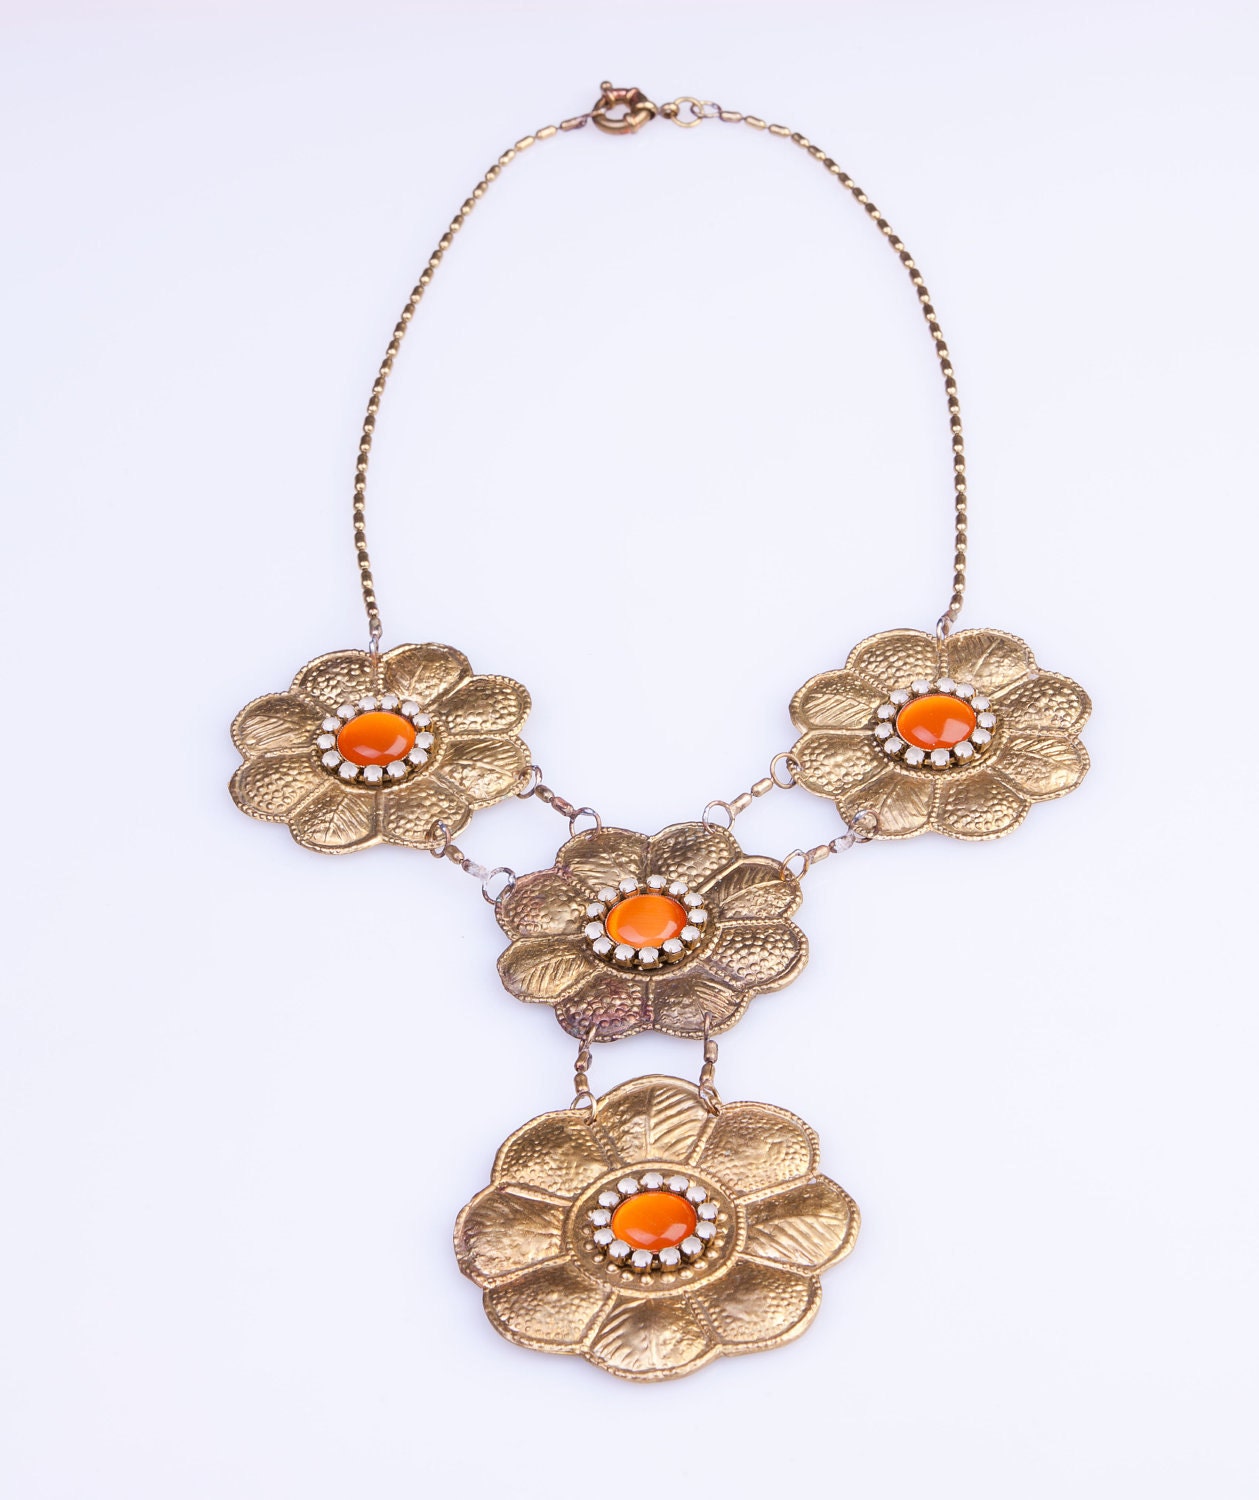 Indonesian necklace 4 flowers - VAMPbijoux